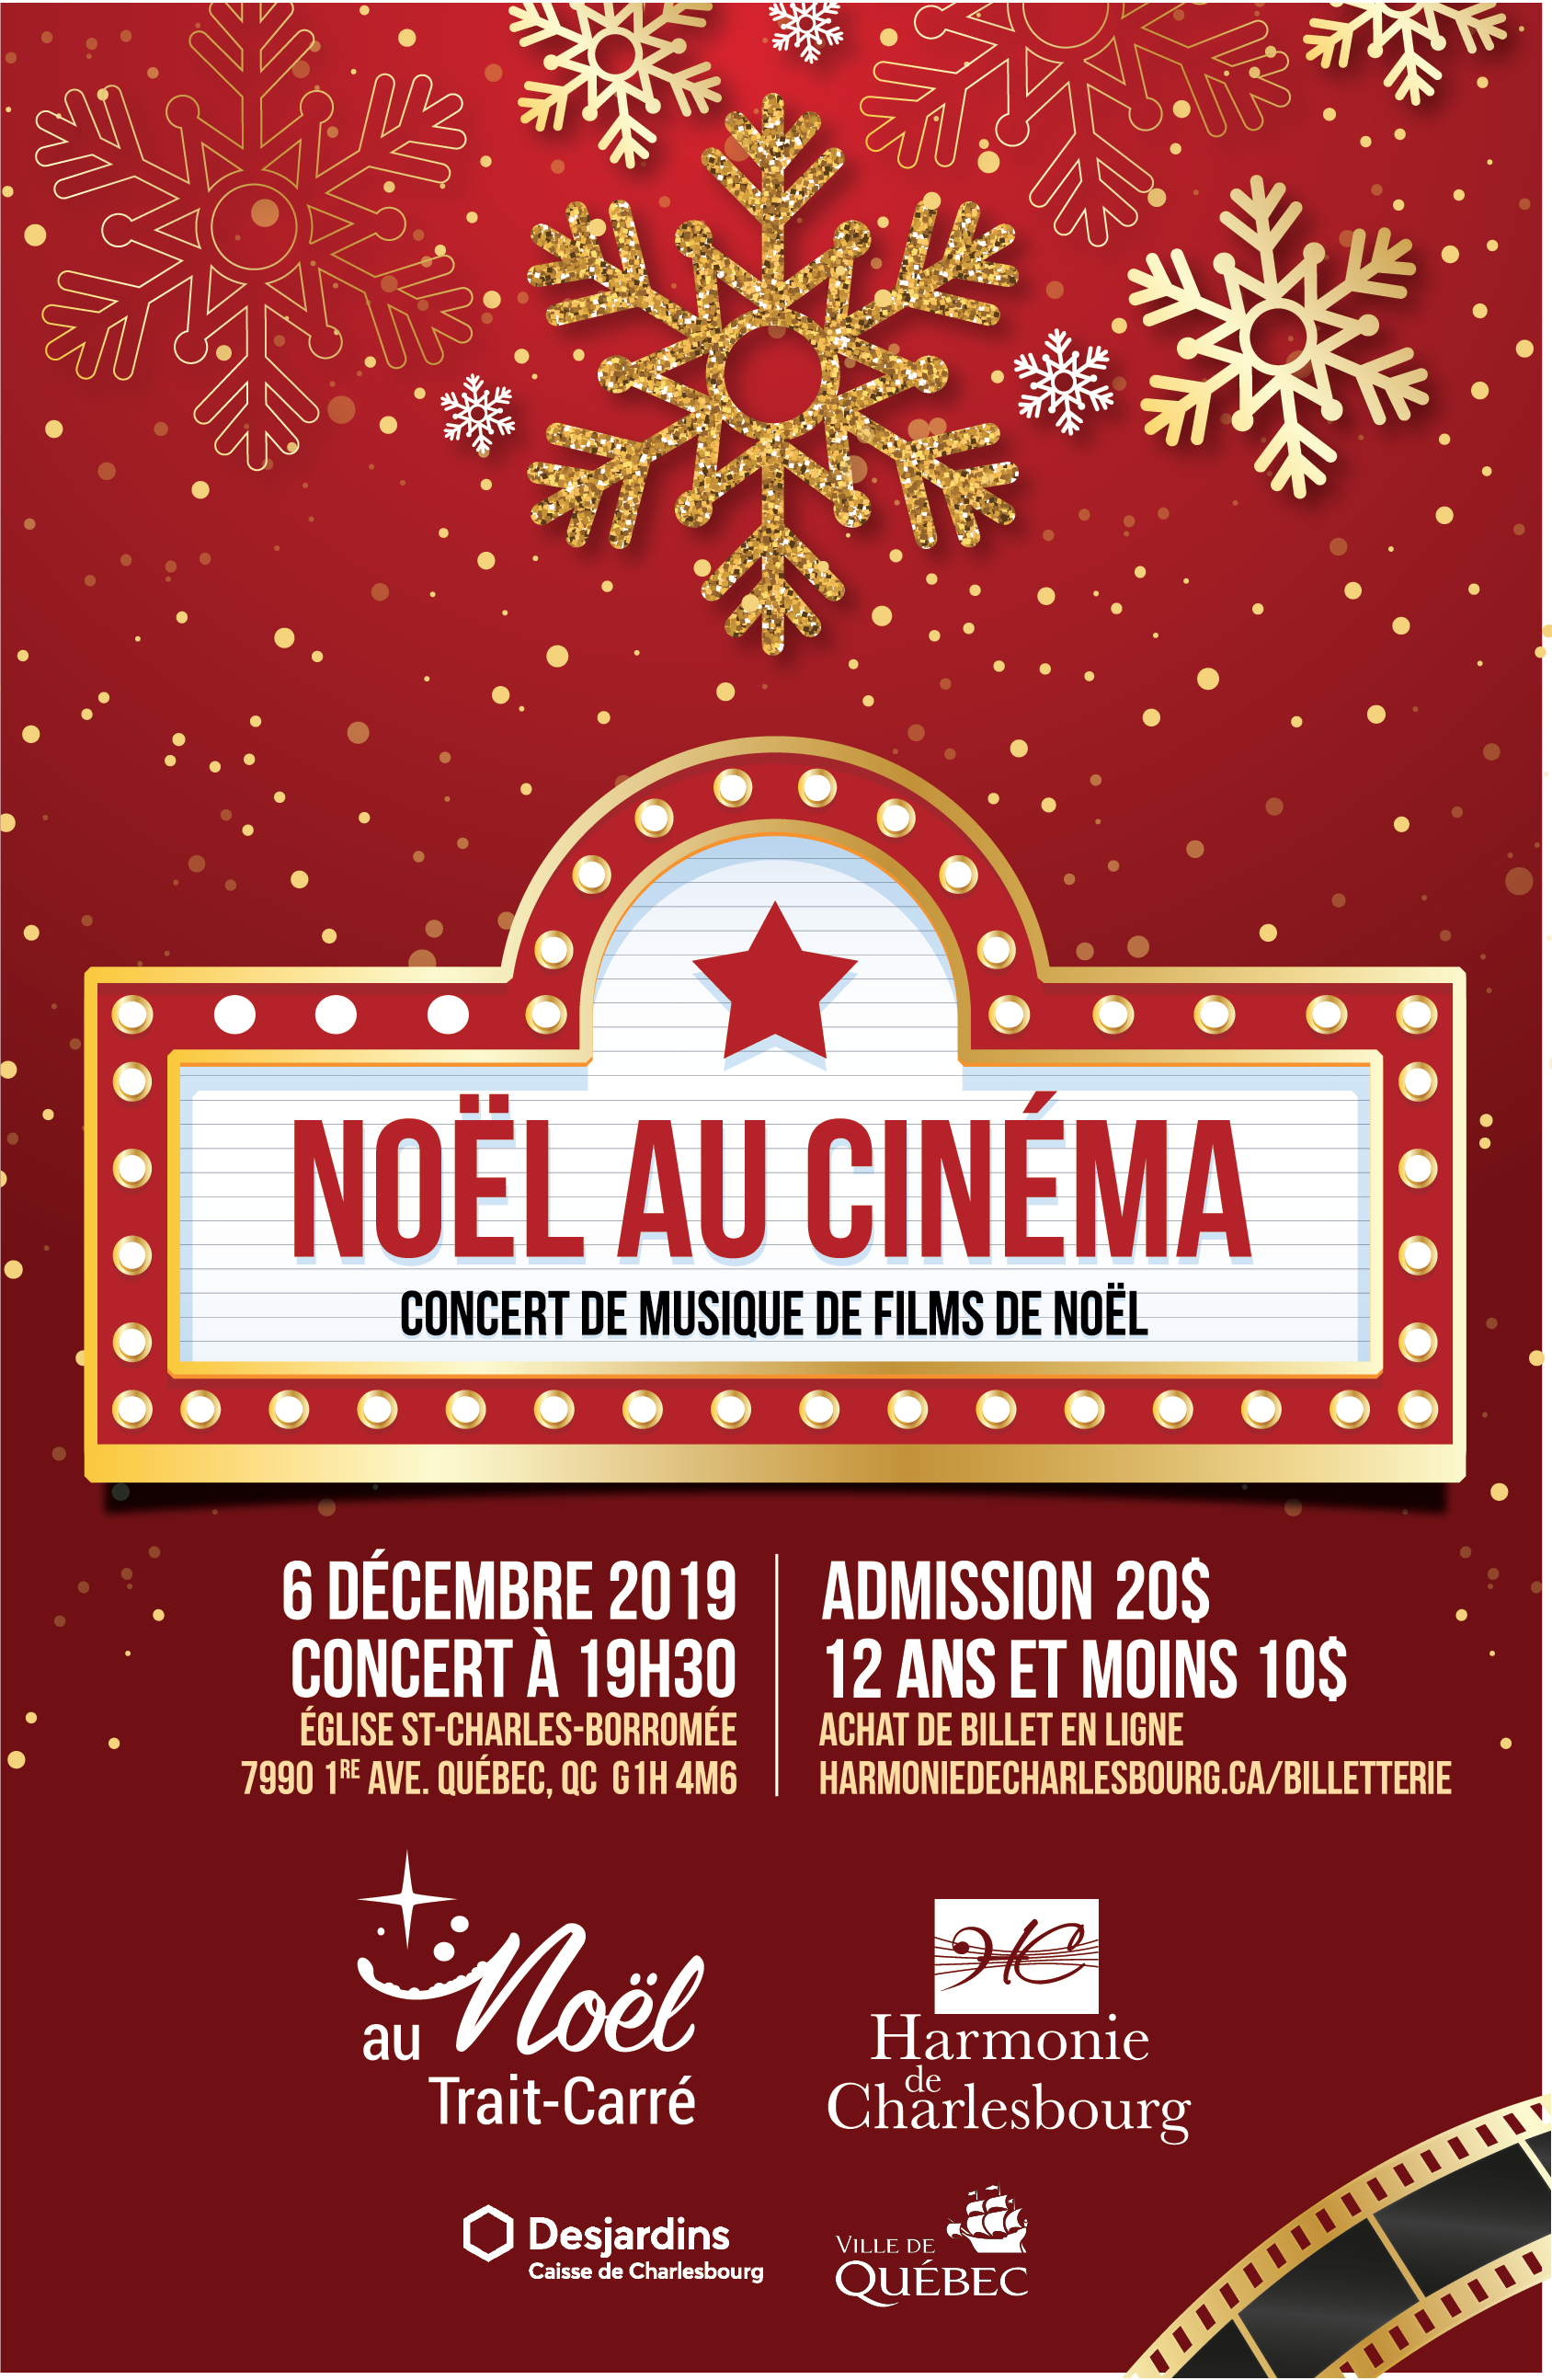 NTC-Concert-Noel-Cinema-Affiche-11x17_VF3-web